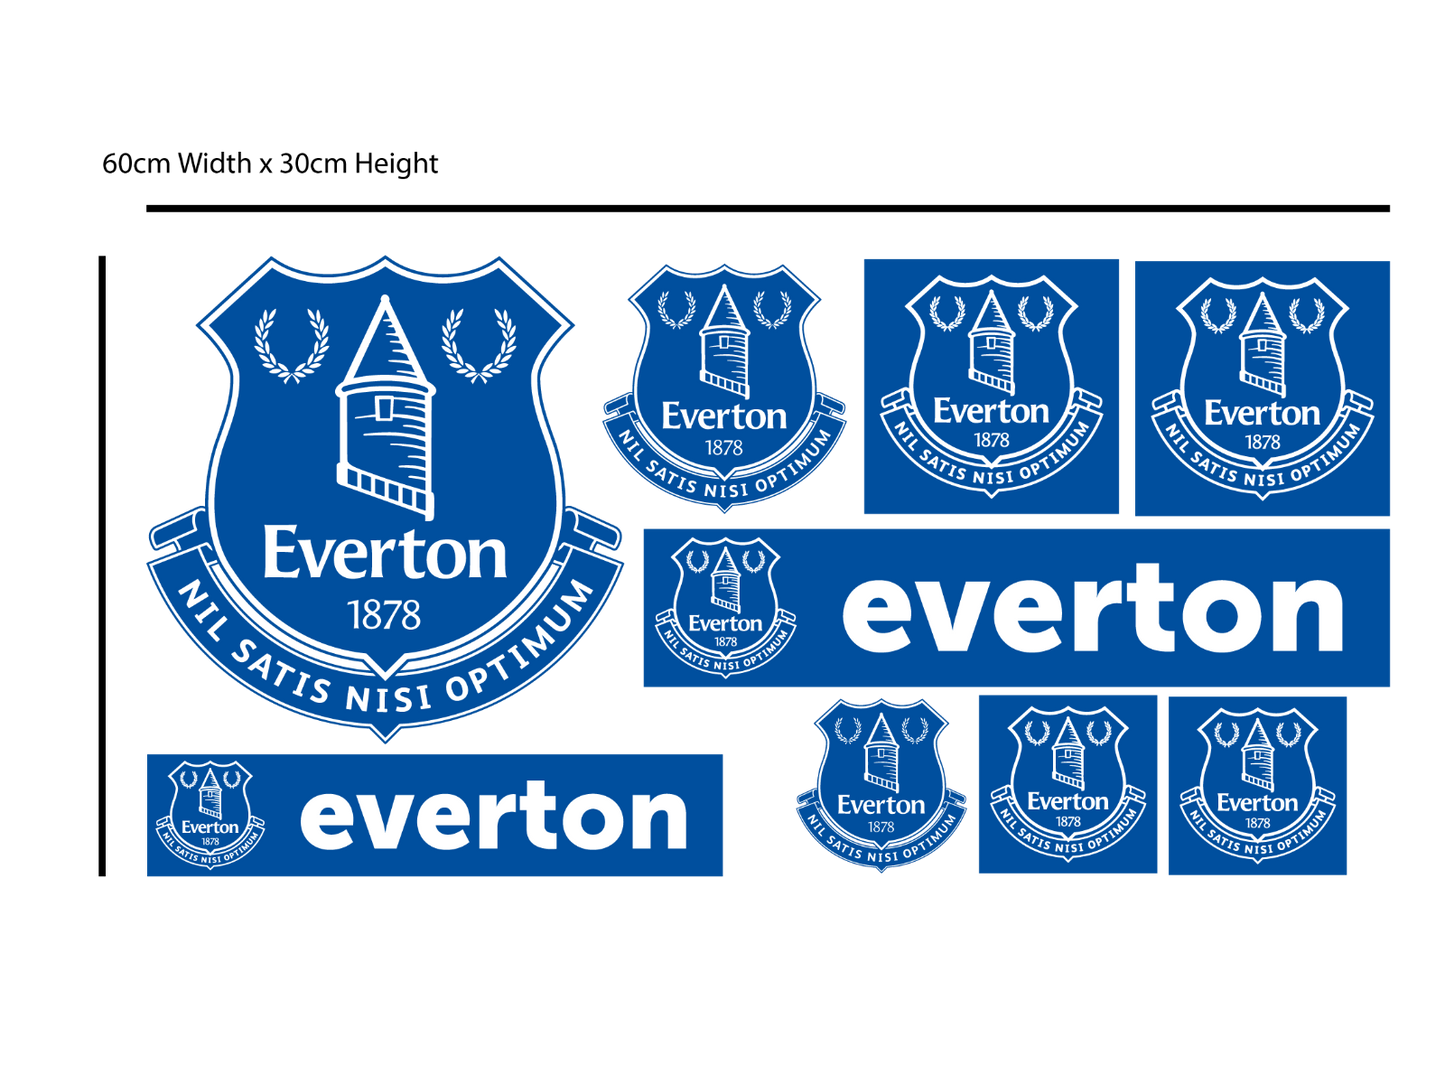 Everton Football Club - Goodison Park Stadium (Night) + Toffees Wall Sticker Set